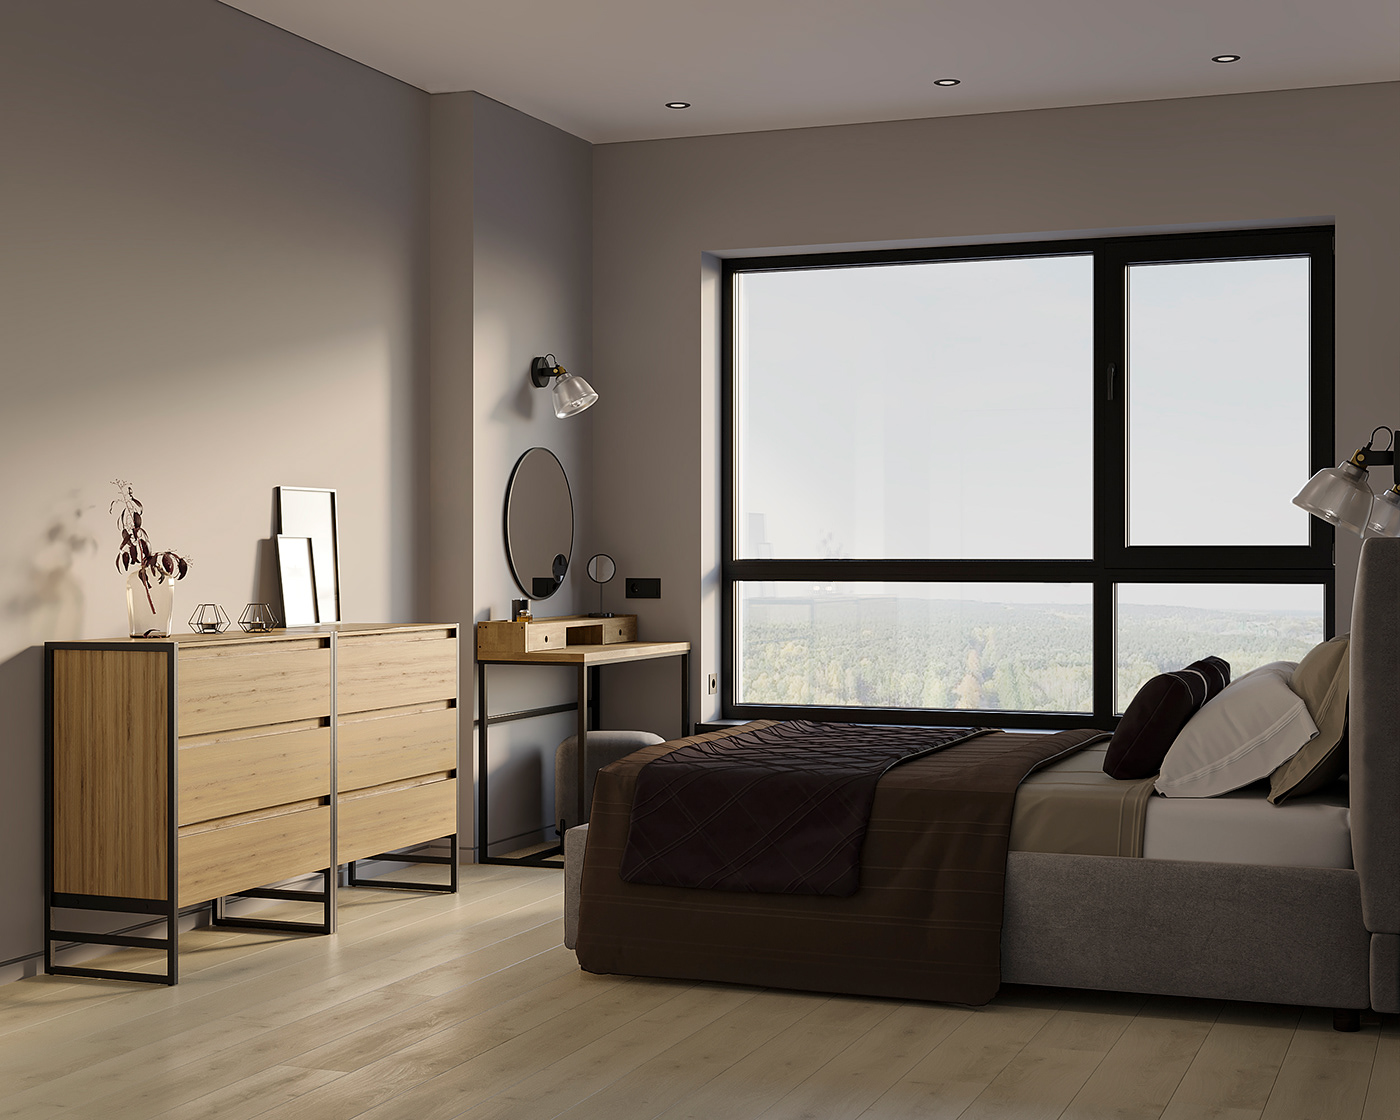 3ds max bedroom bedroom design Interior LOFT DESIGN visualization визуализация Визуализация интерьера современный дизайн современный интерьер